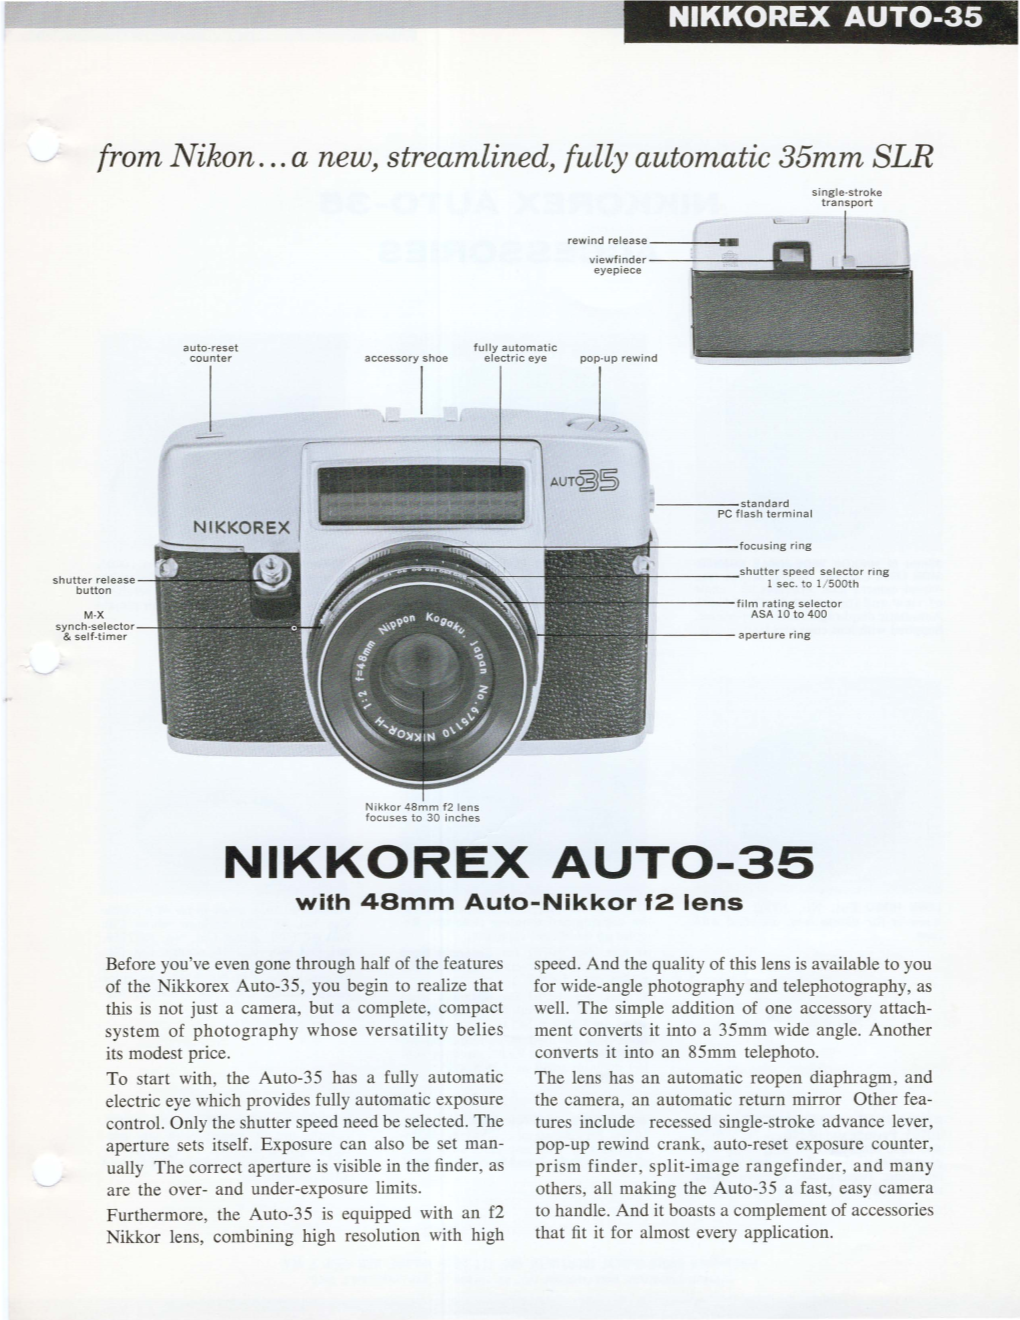 Nikkorex Auto-35